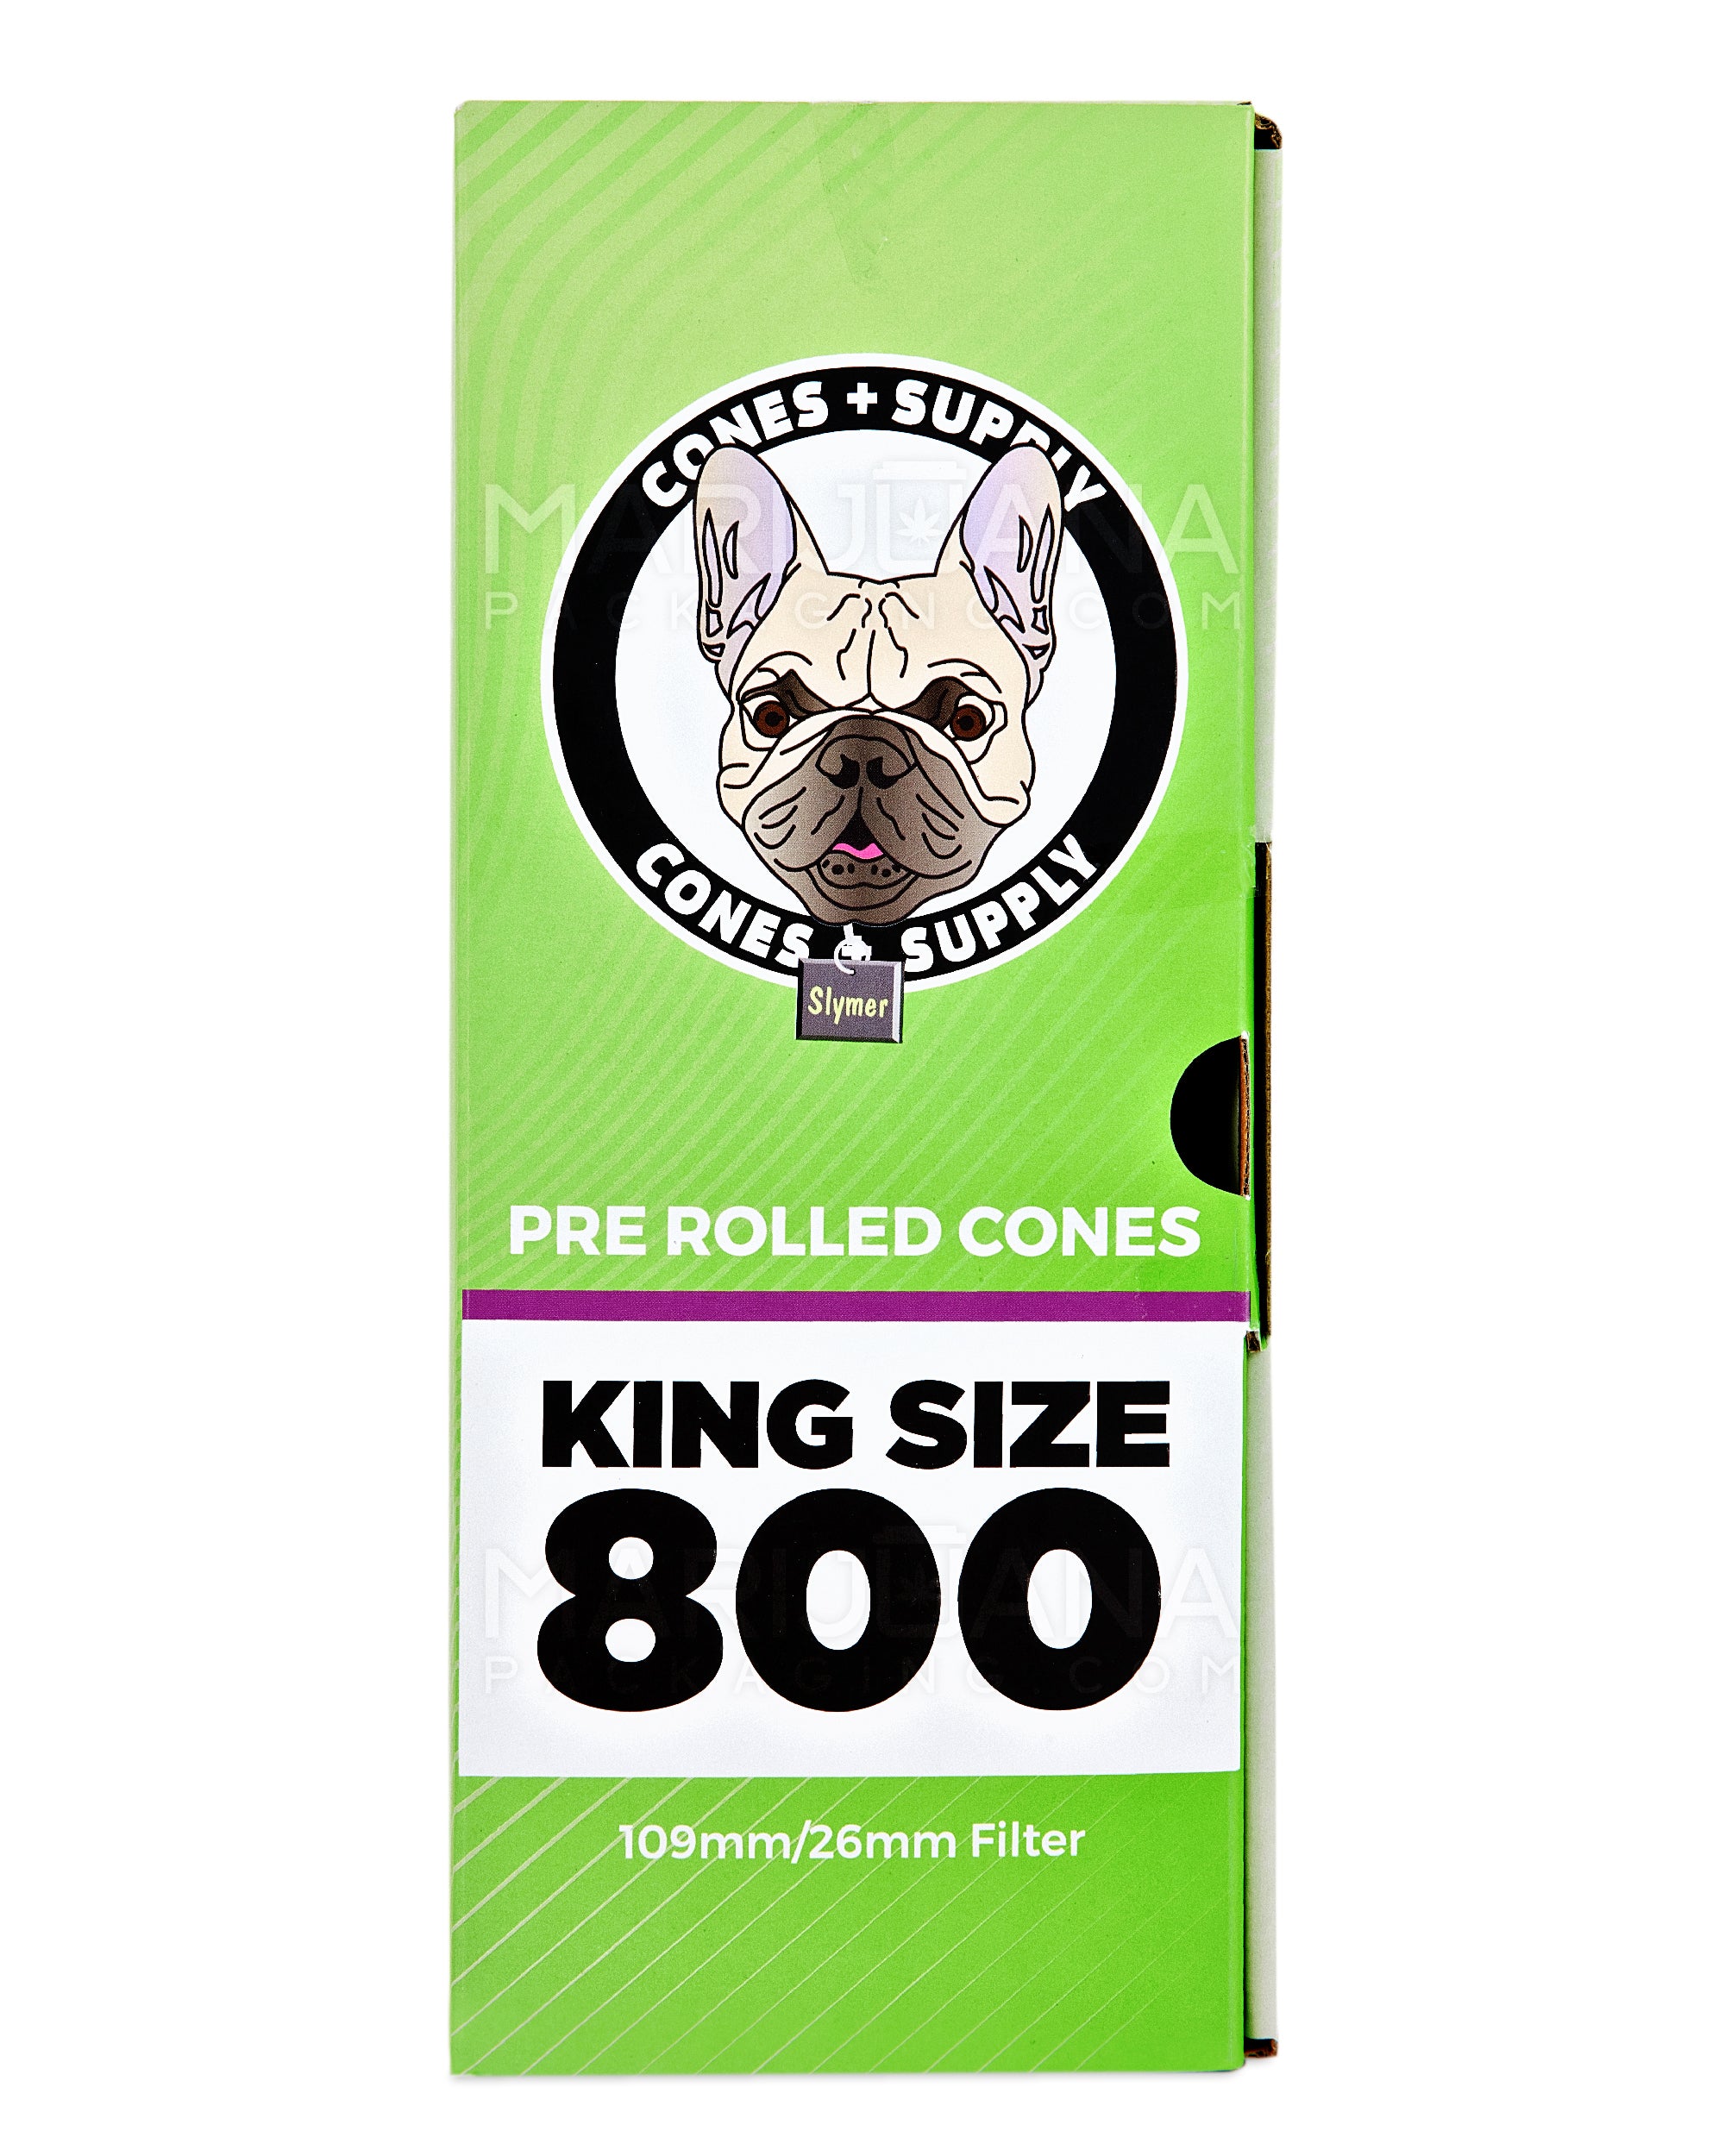 CONES + SUPPLY | King Size Pre-Rolled Organic Hemp Cones | 109mm - Hemp Paper - 800 Count - 5